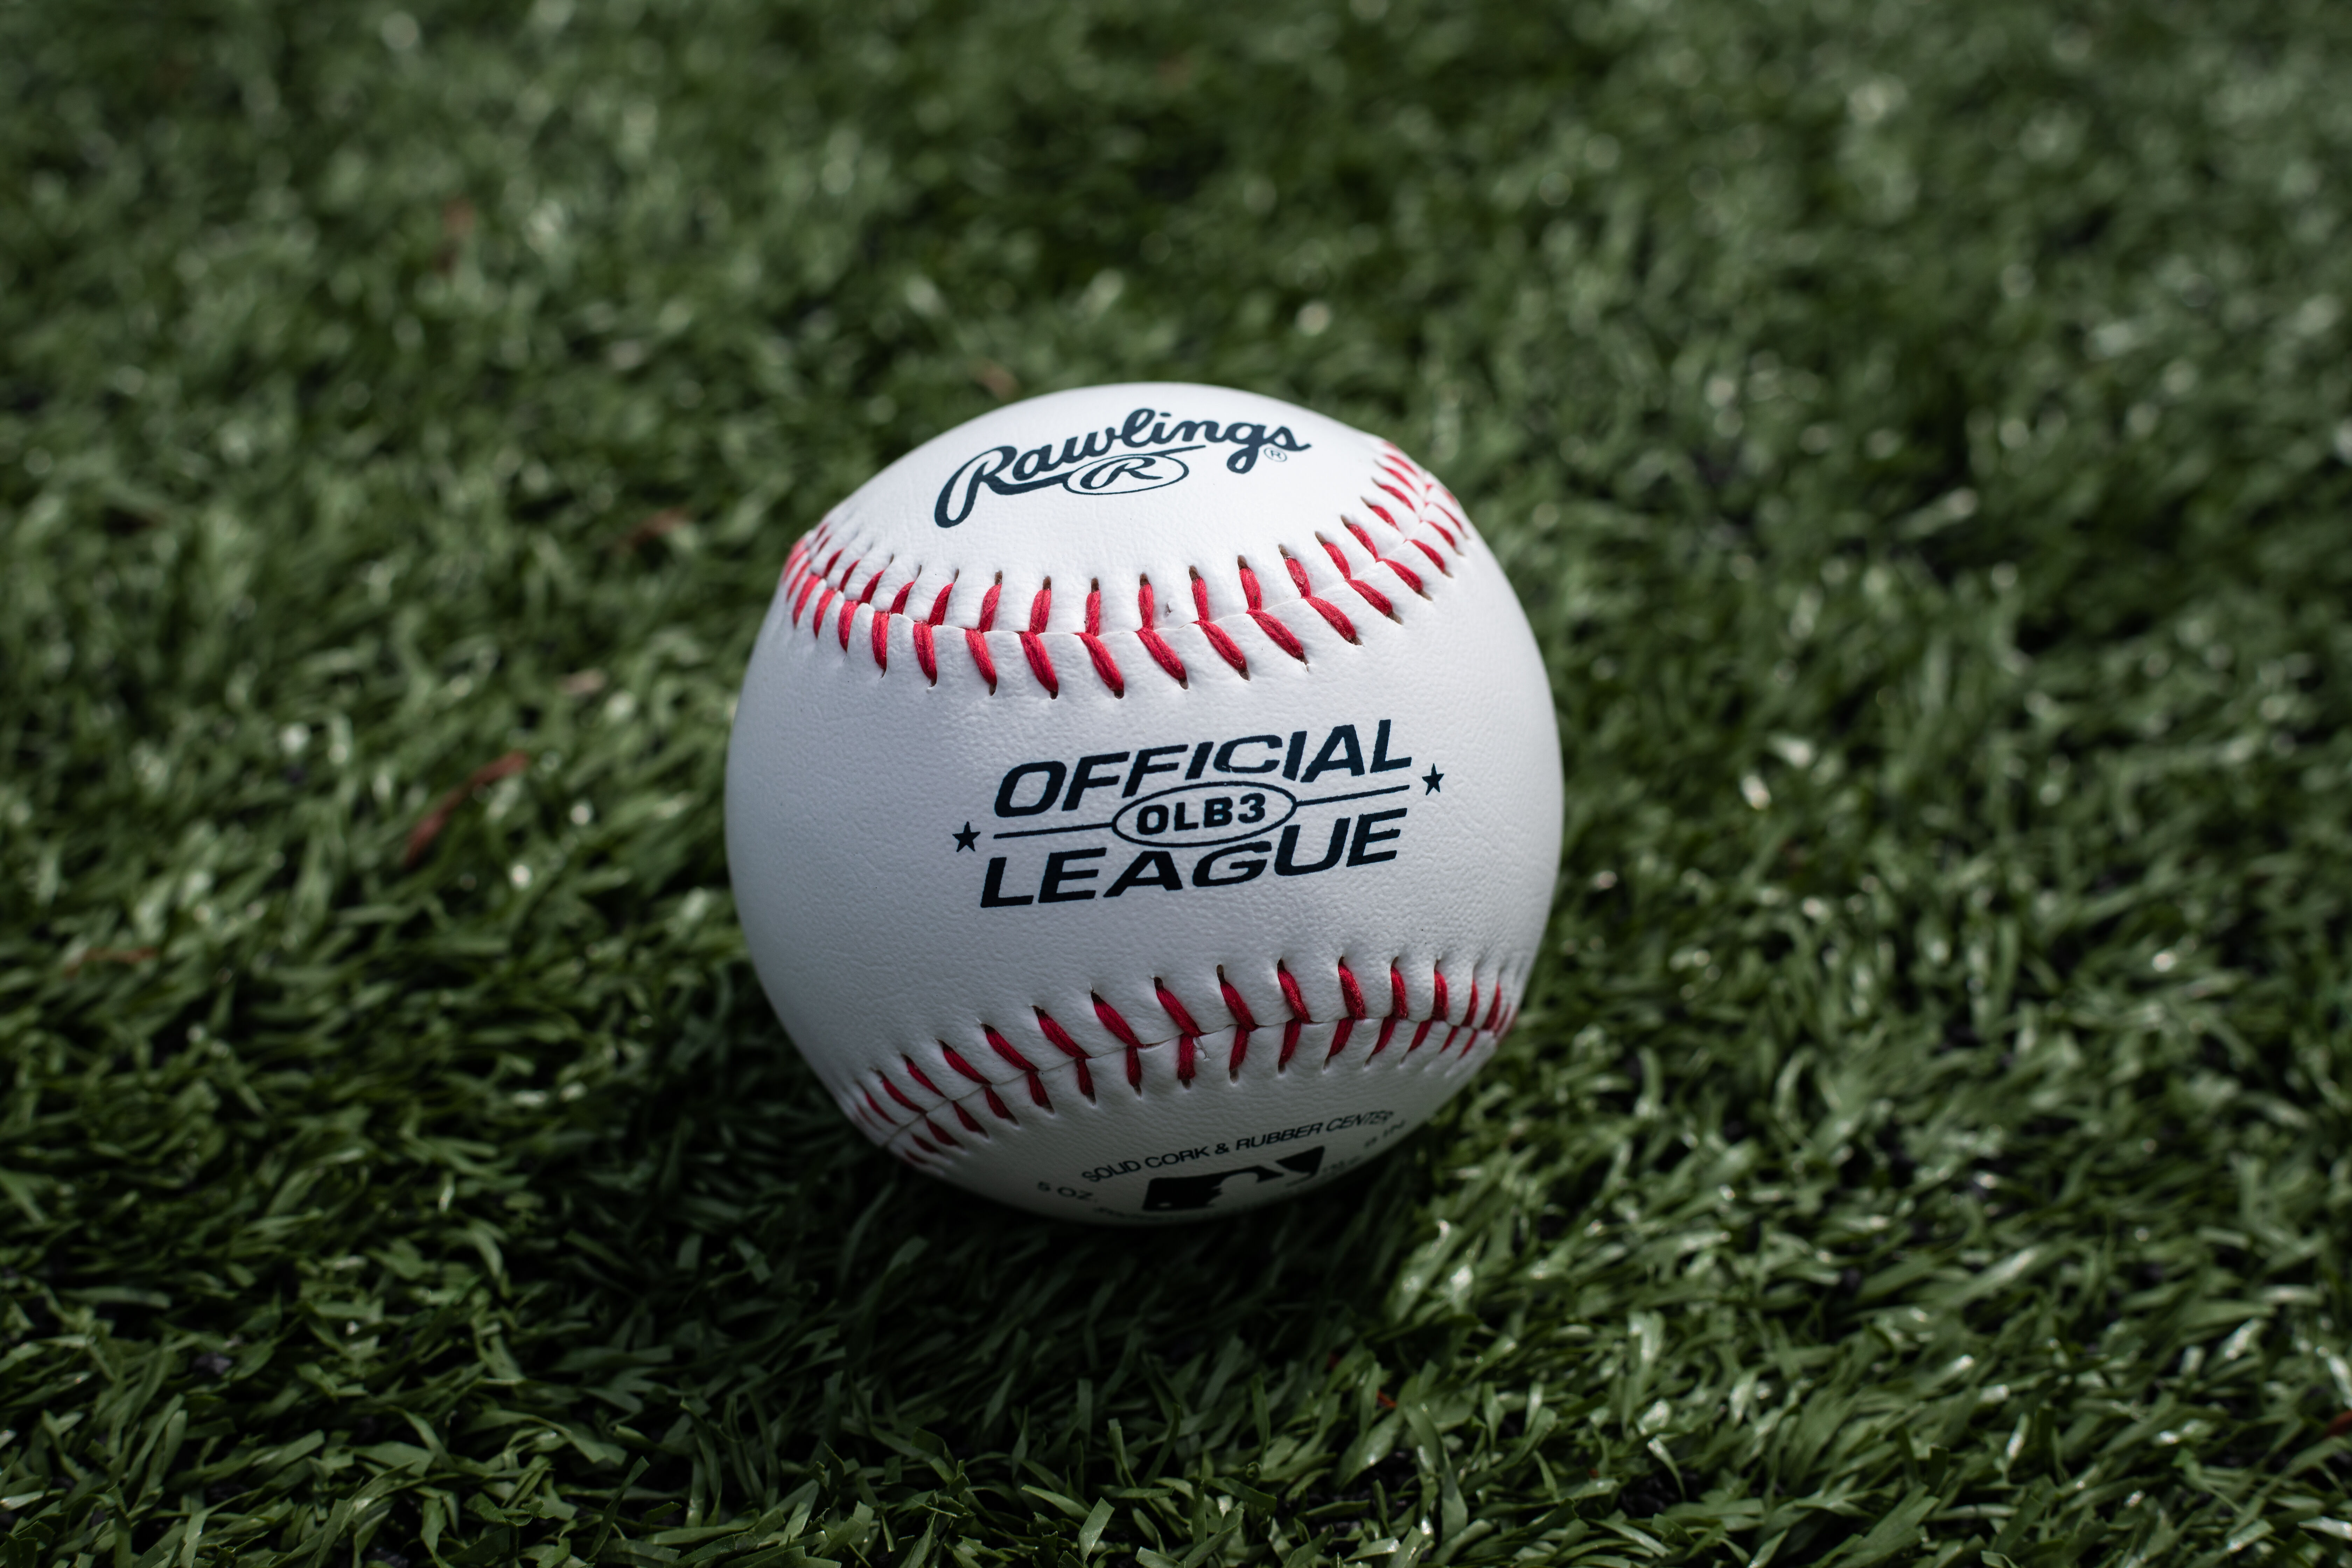 Official League Recreational Baseballs